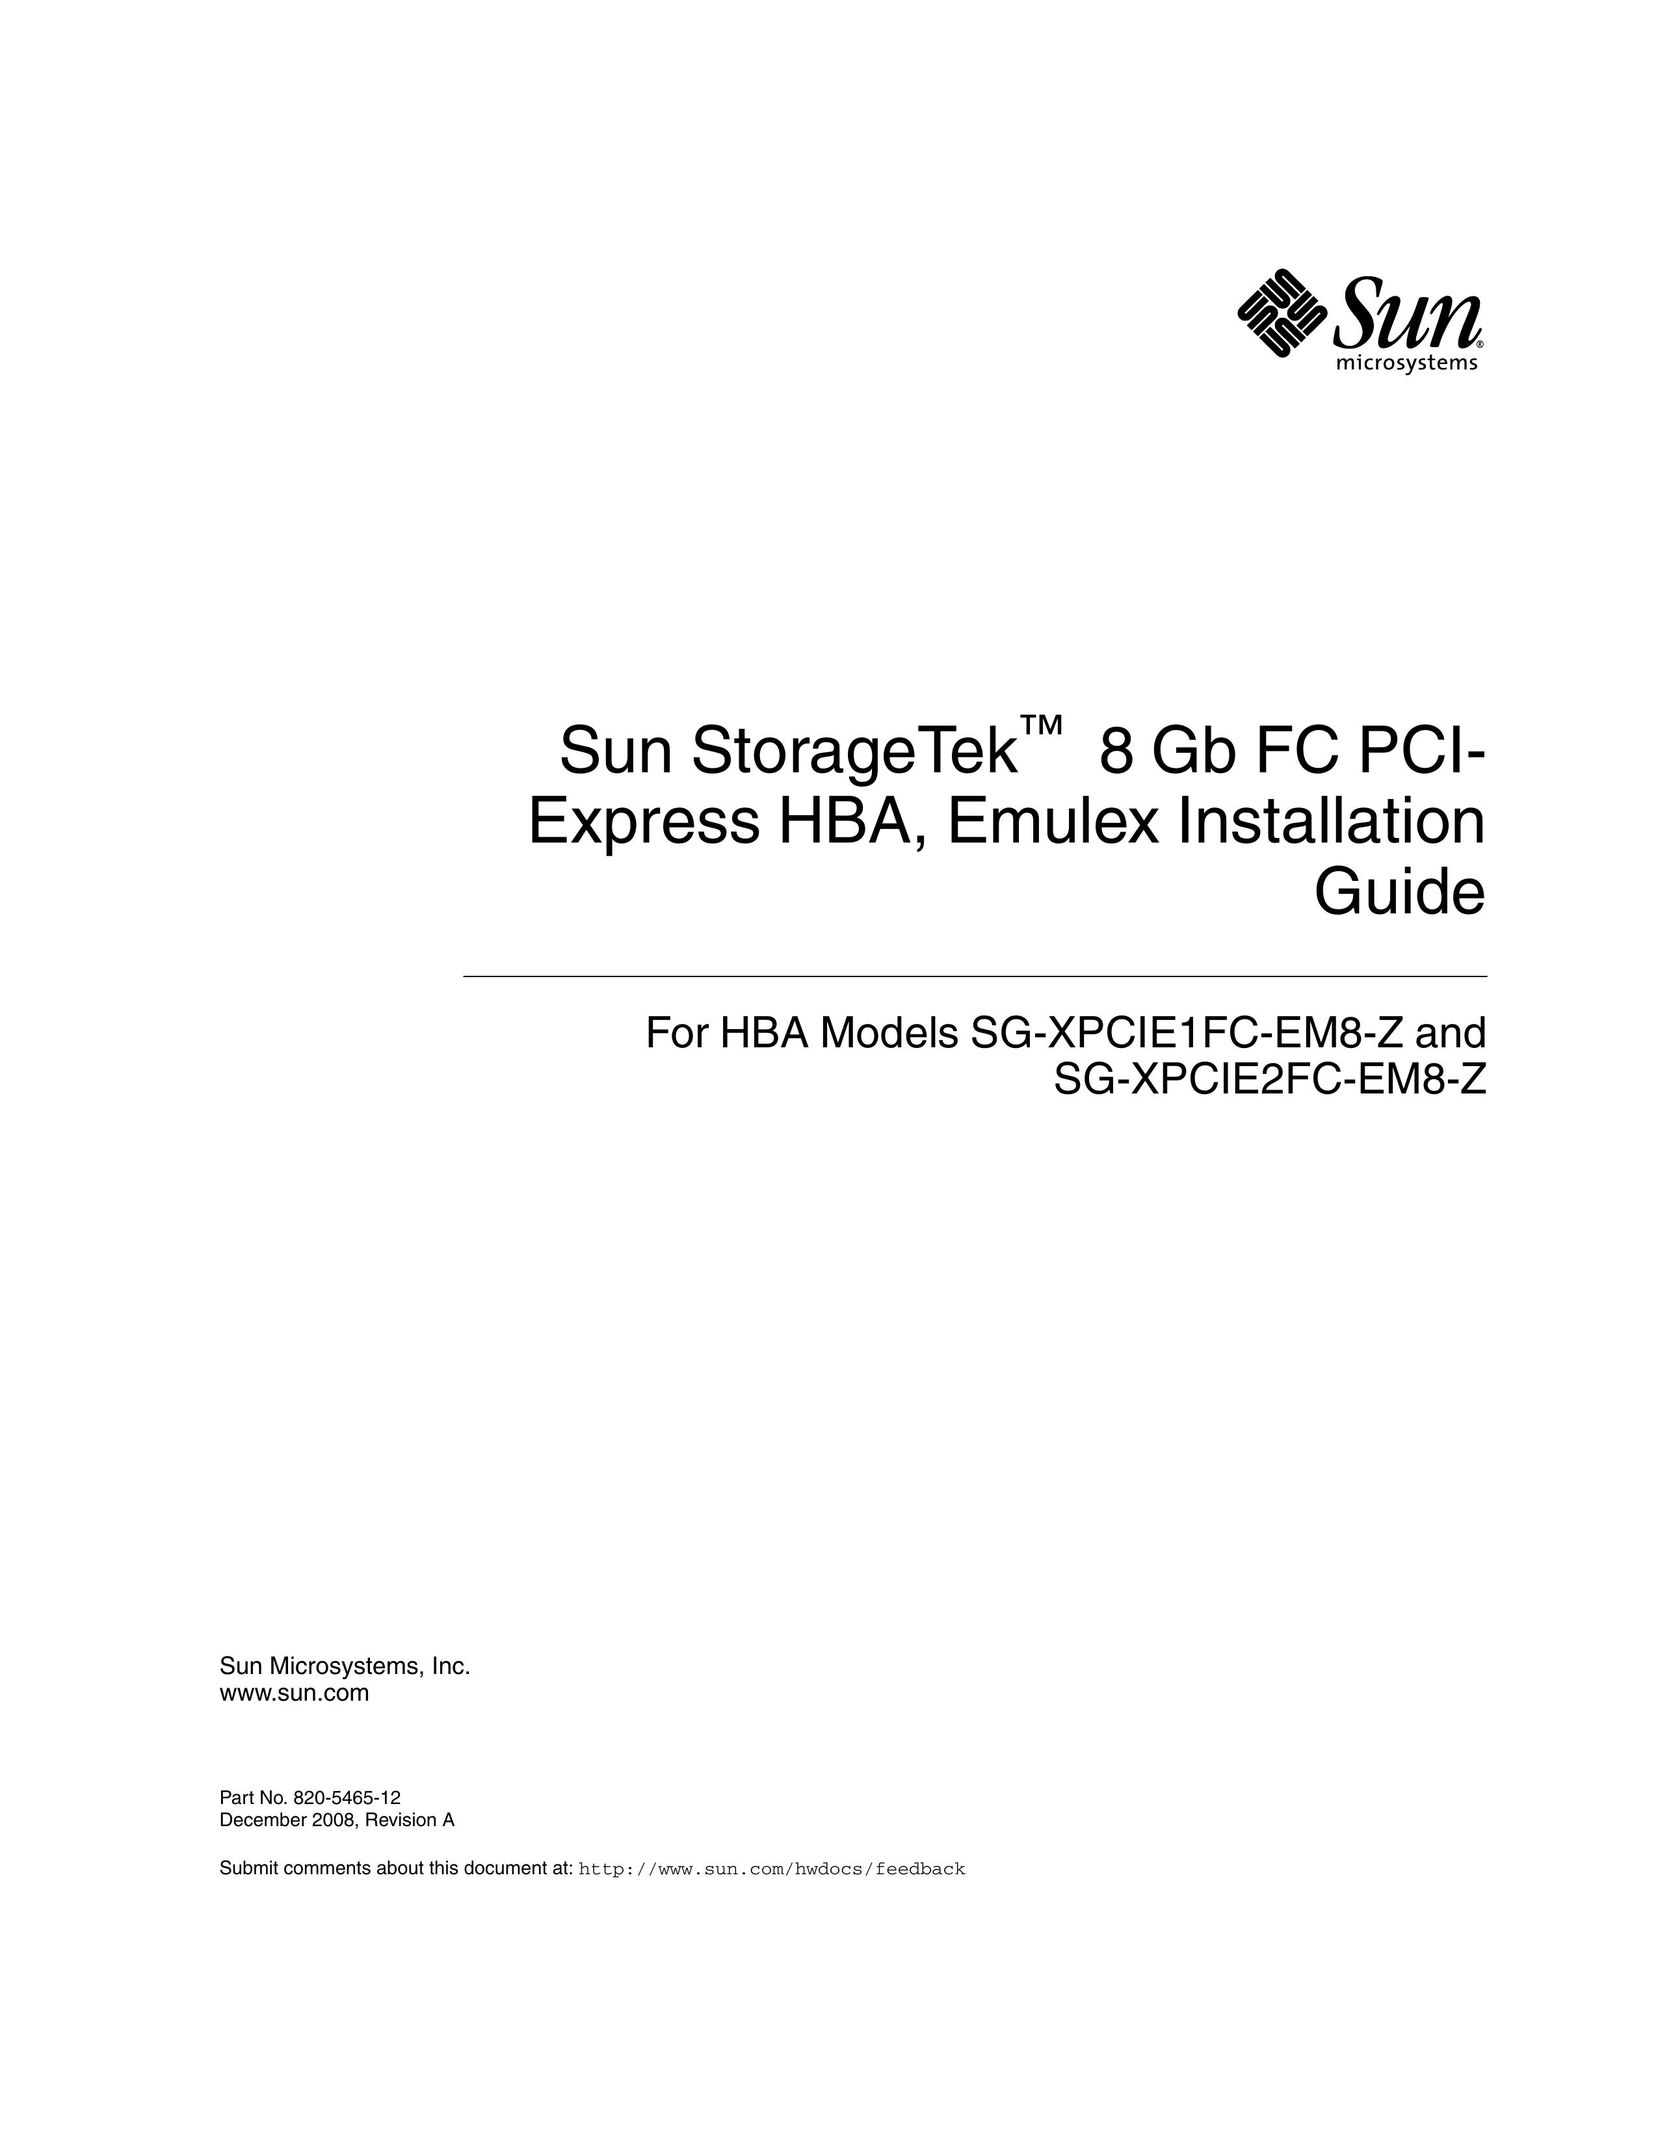 Sun Microsystems SG-XPCIE2FC-EM8-Z Network Card User Manual